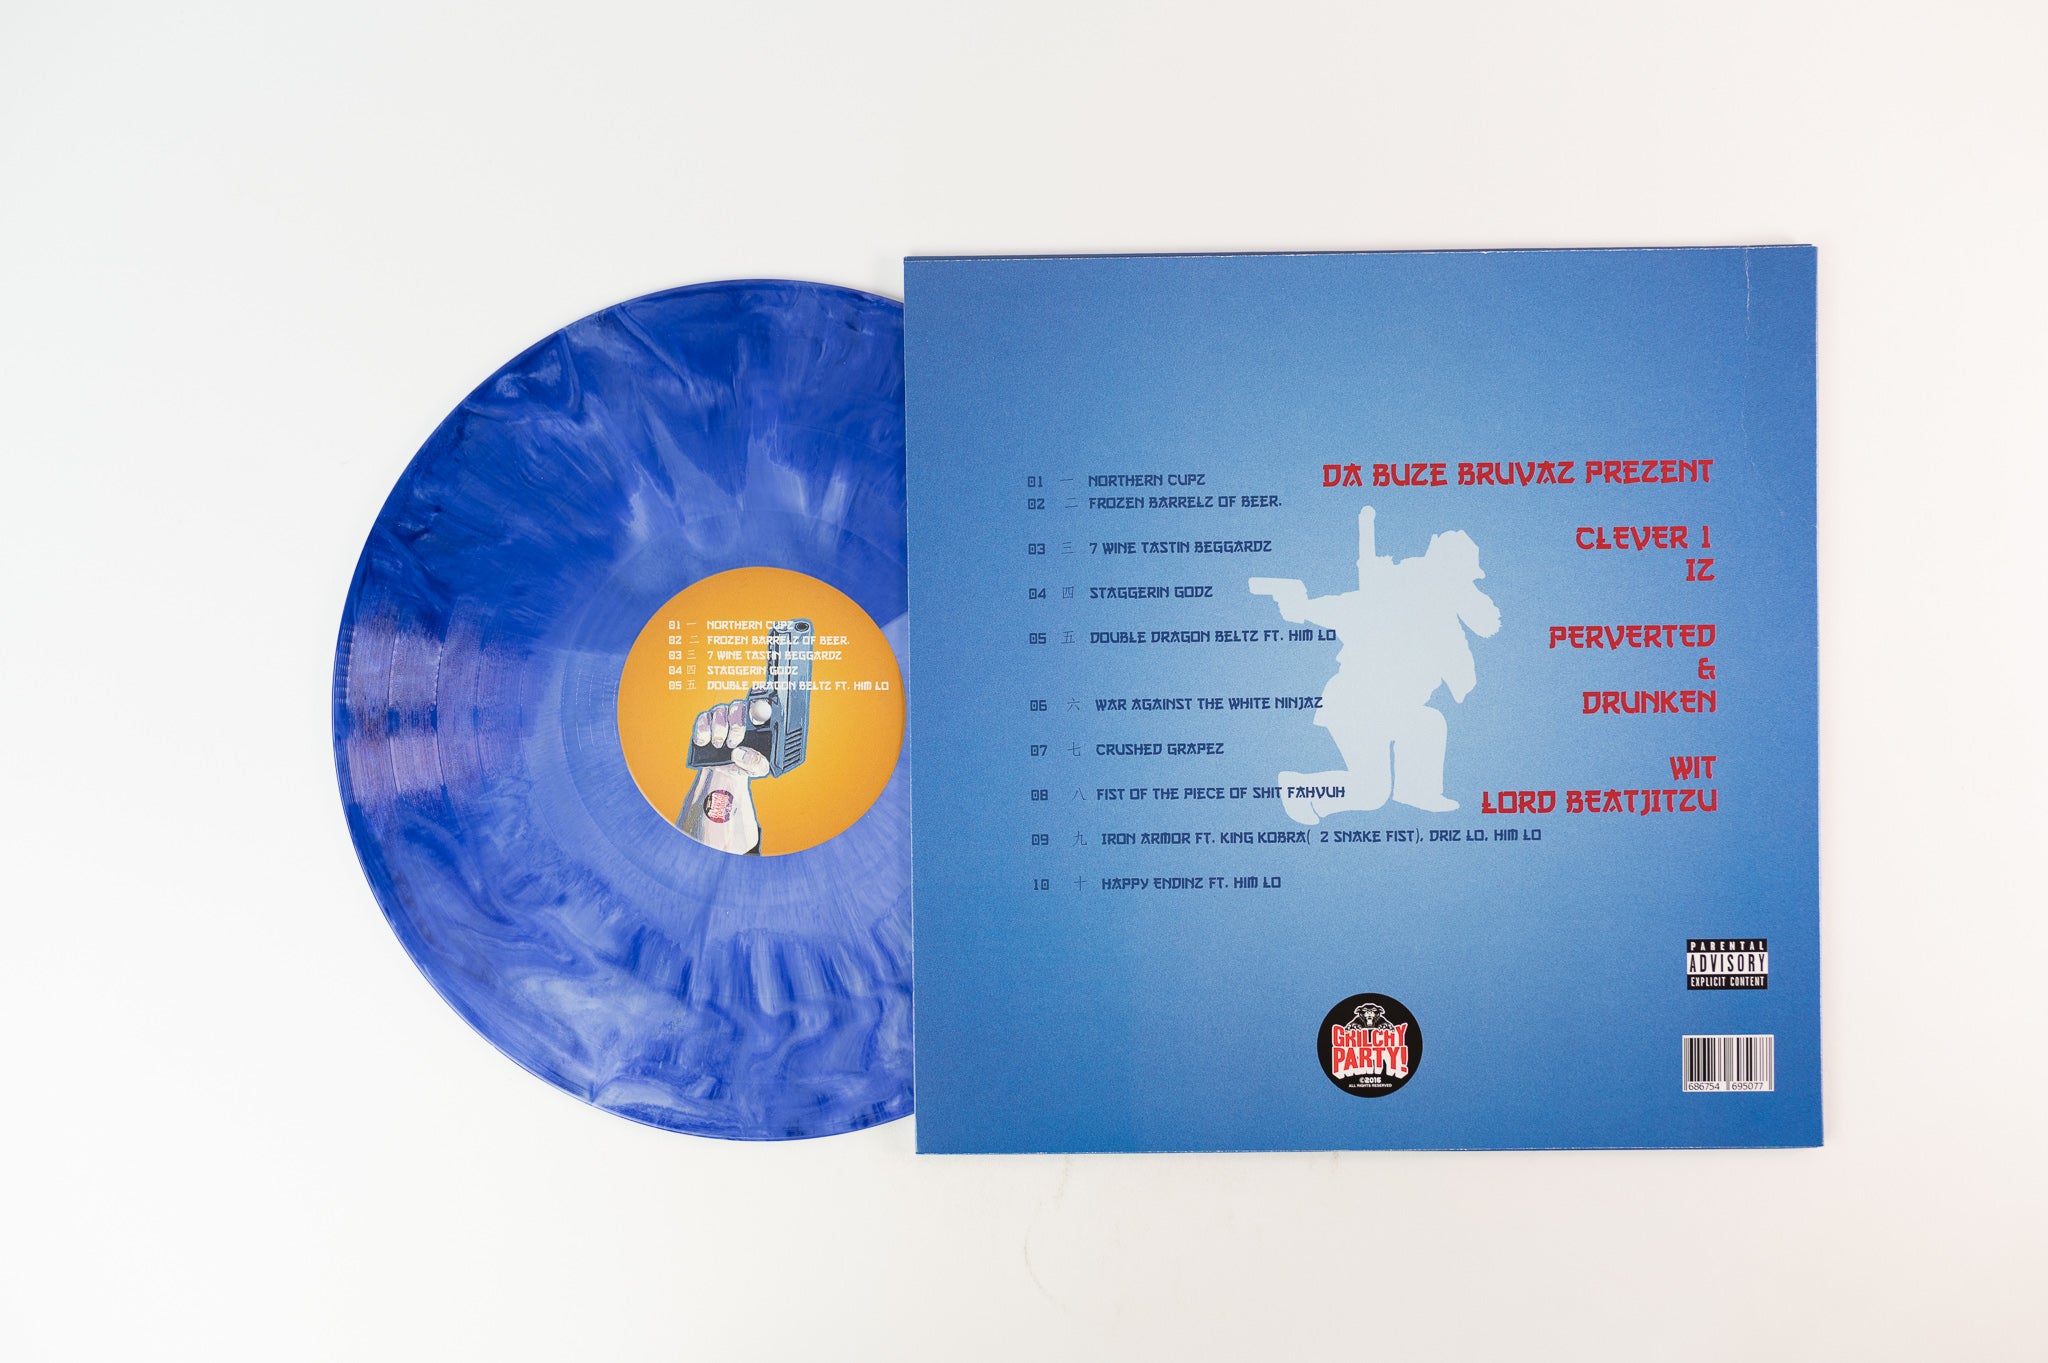 Da Buze Bruvaz - Iz Perverted & Drunken Wit Lord Beatjitzu on Grilchy Drunken Blue Marble Vinyl